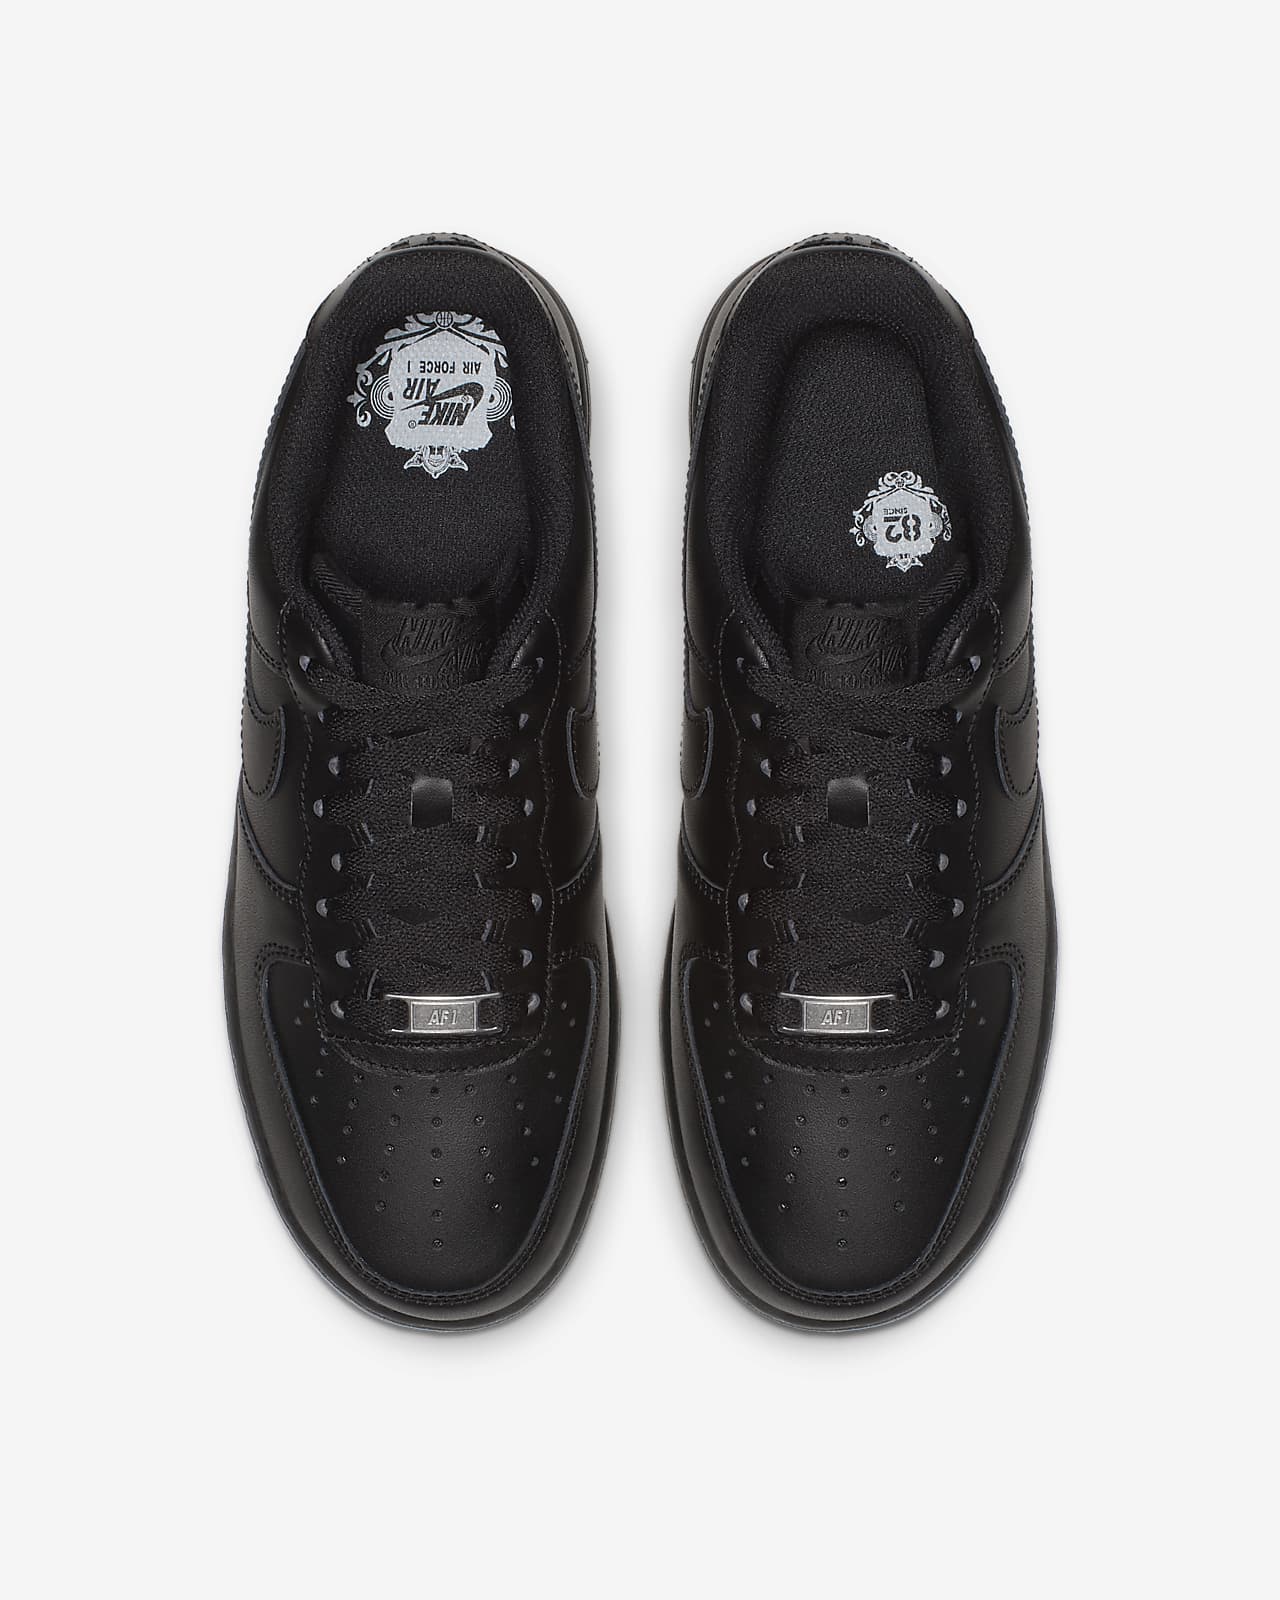 black nike air force shoes